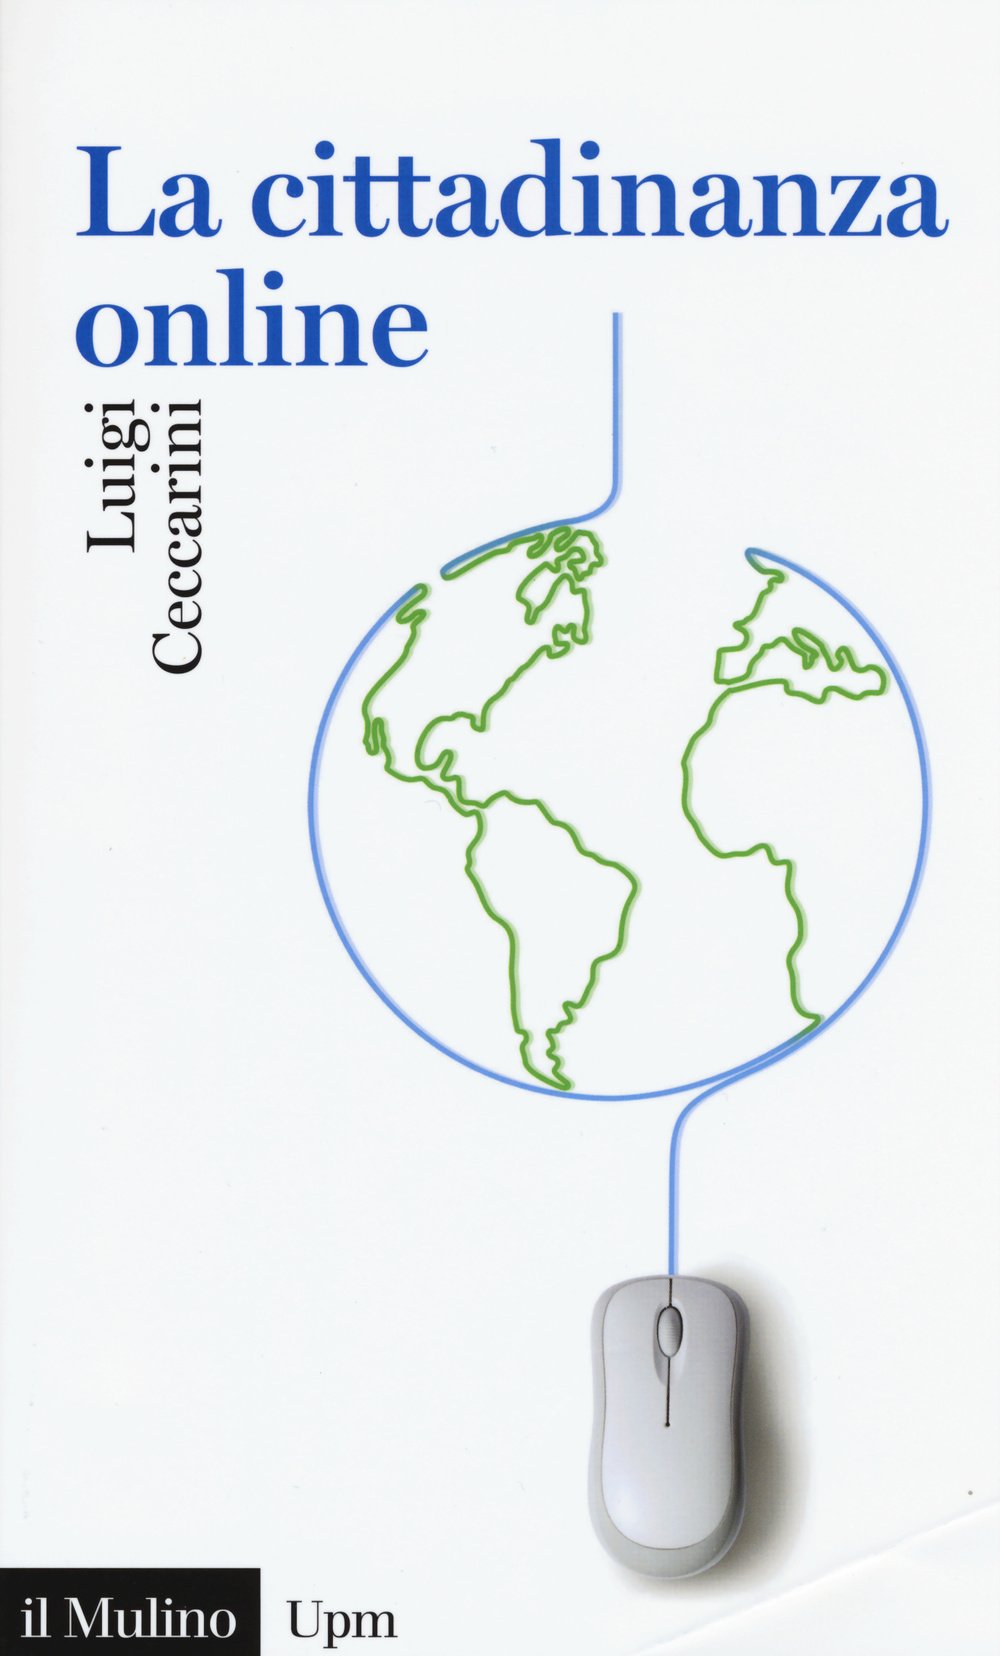 La cittadinanza online